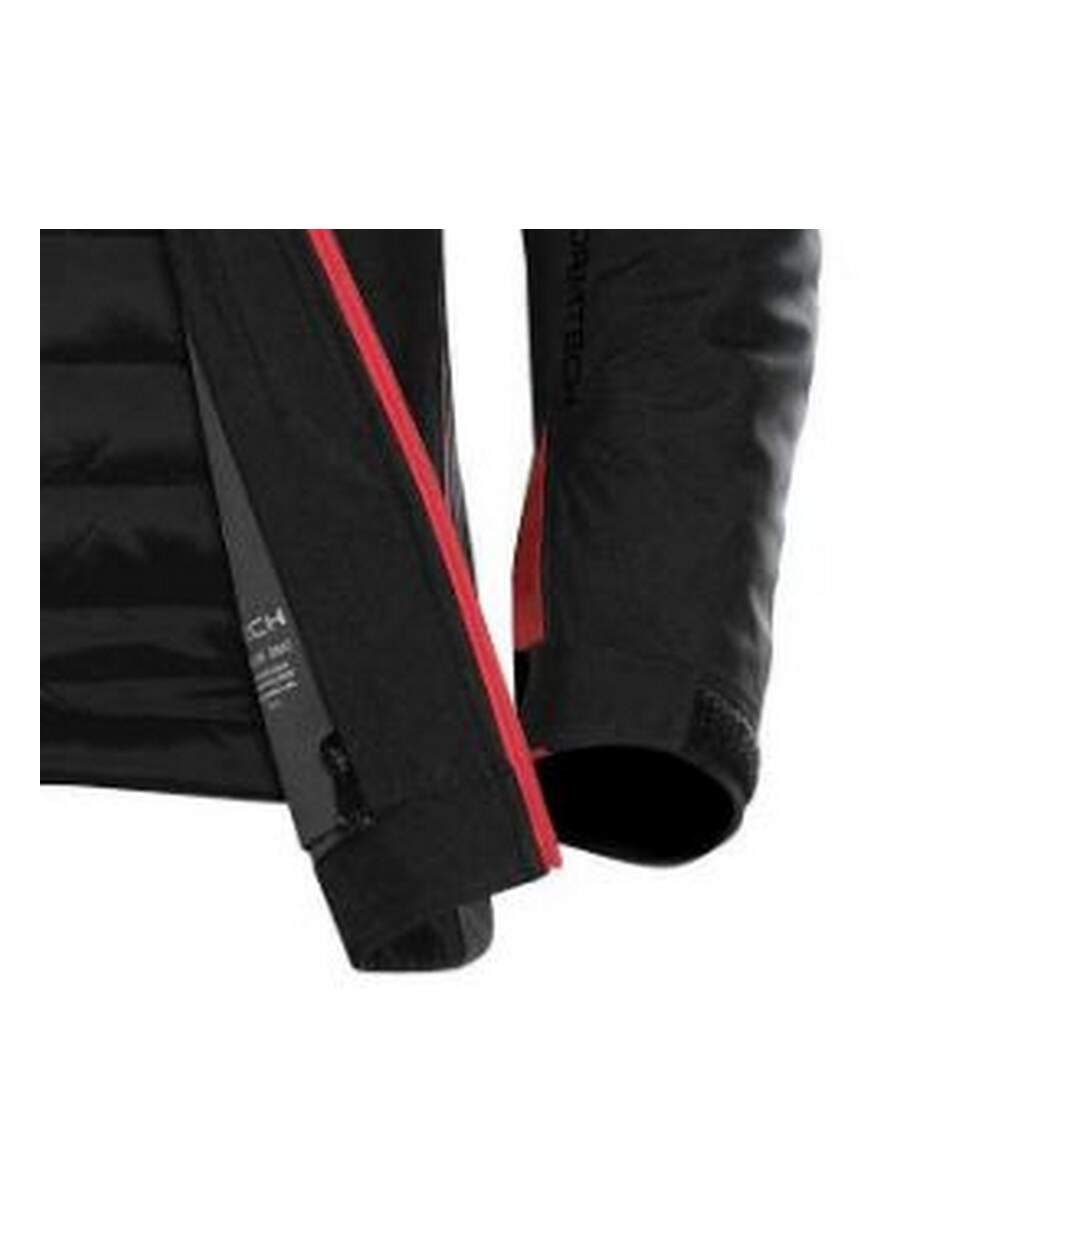 Stormtech Mens Matrix System Jacket (Black/Red)